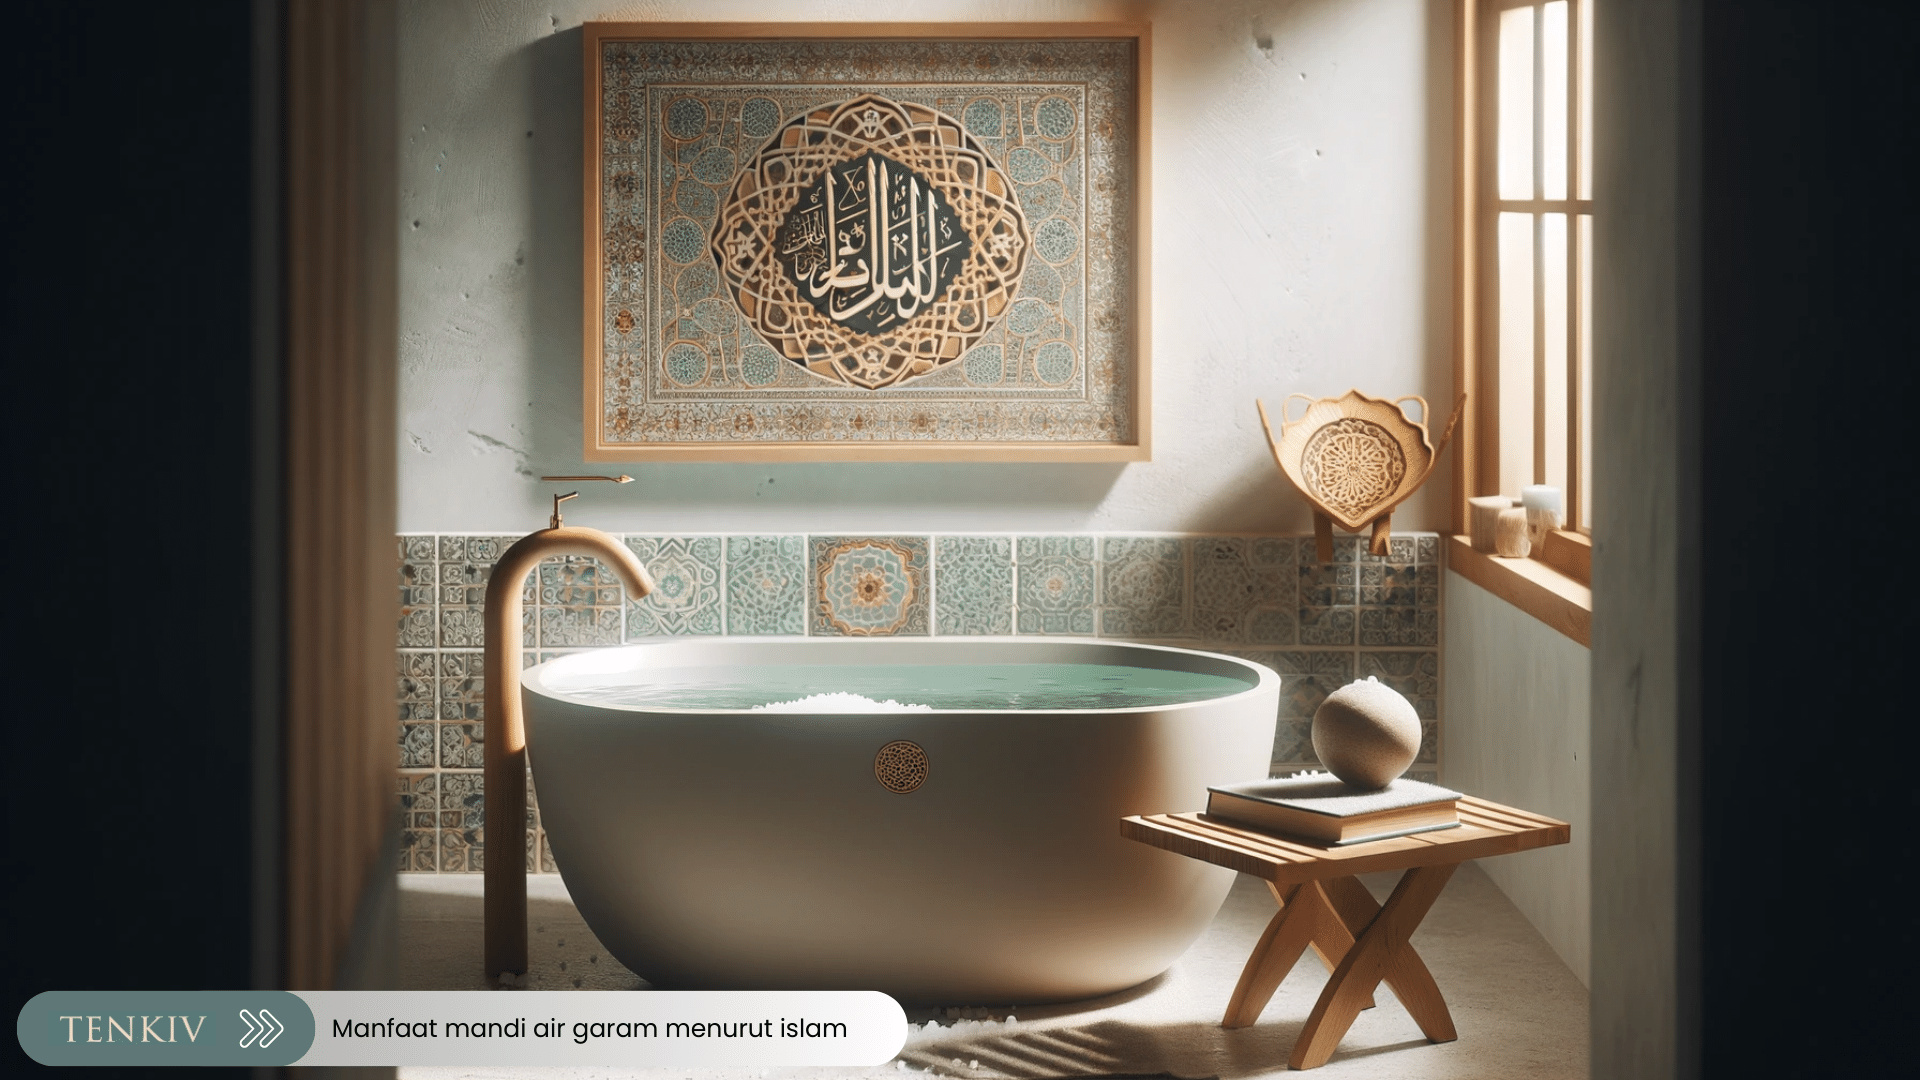 Manfaat mandi air garam menurut islam